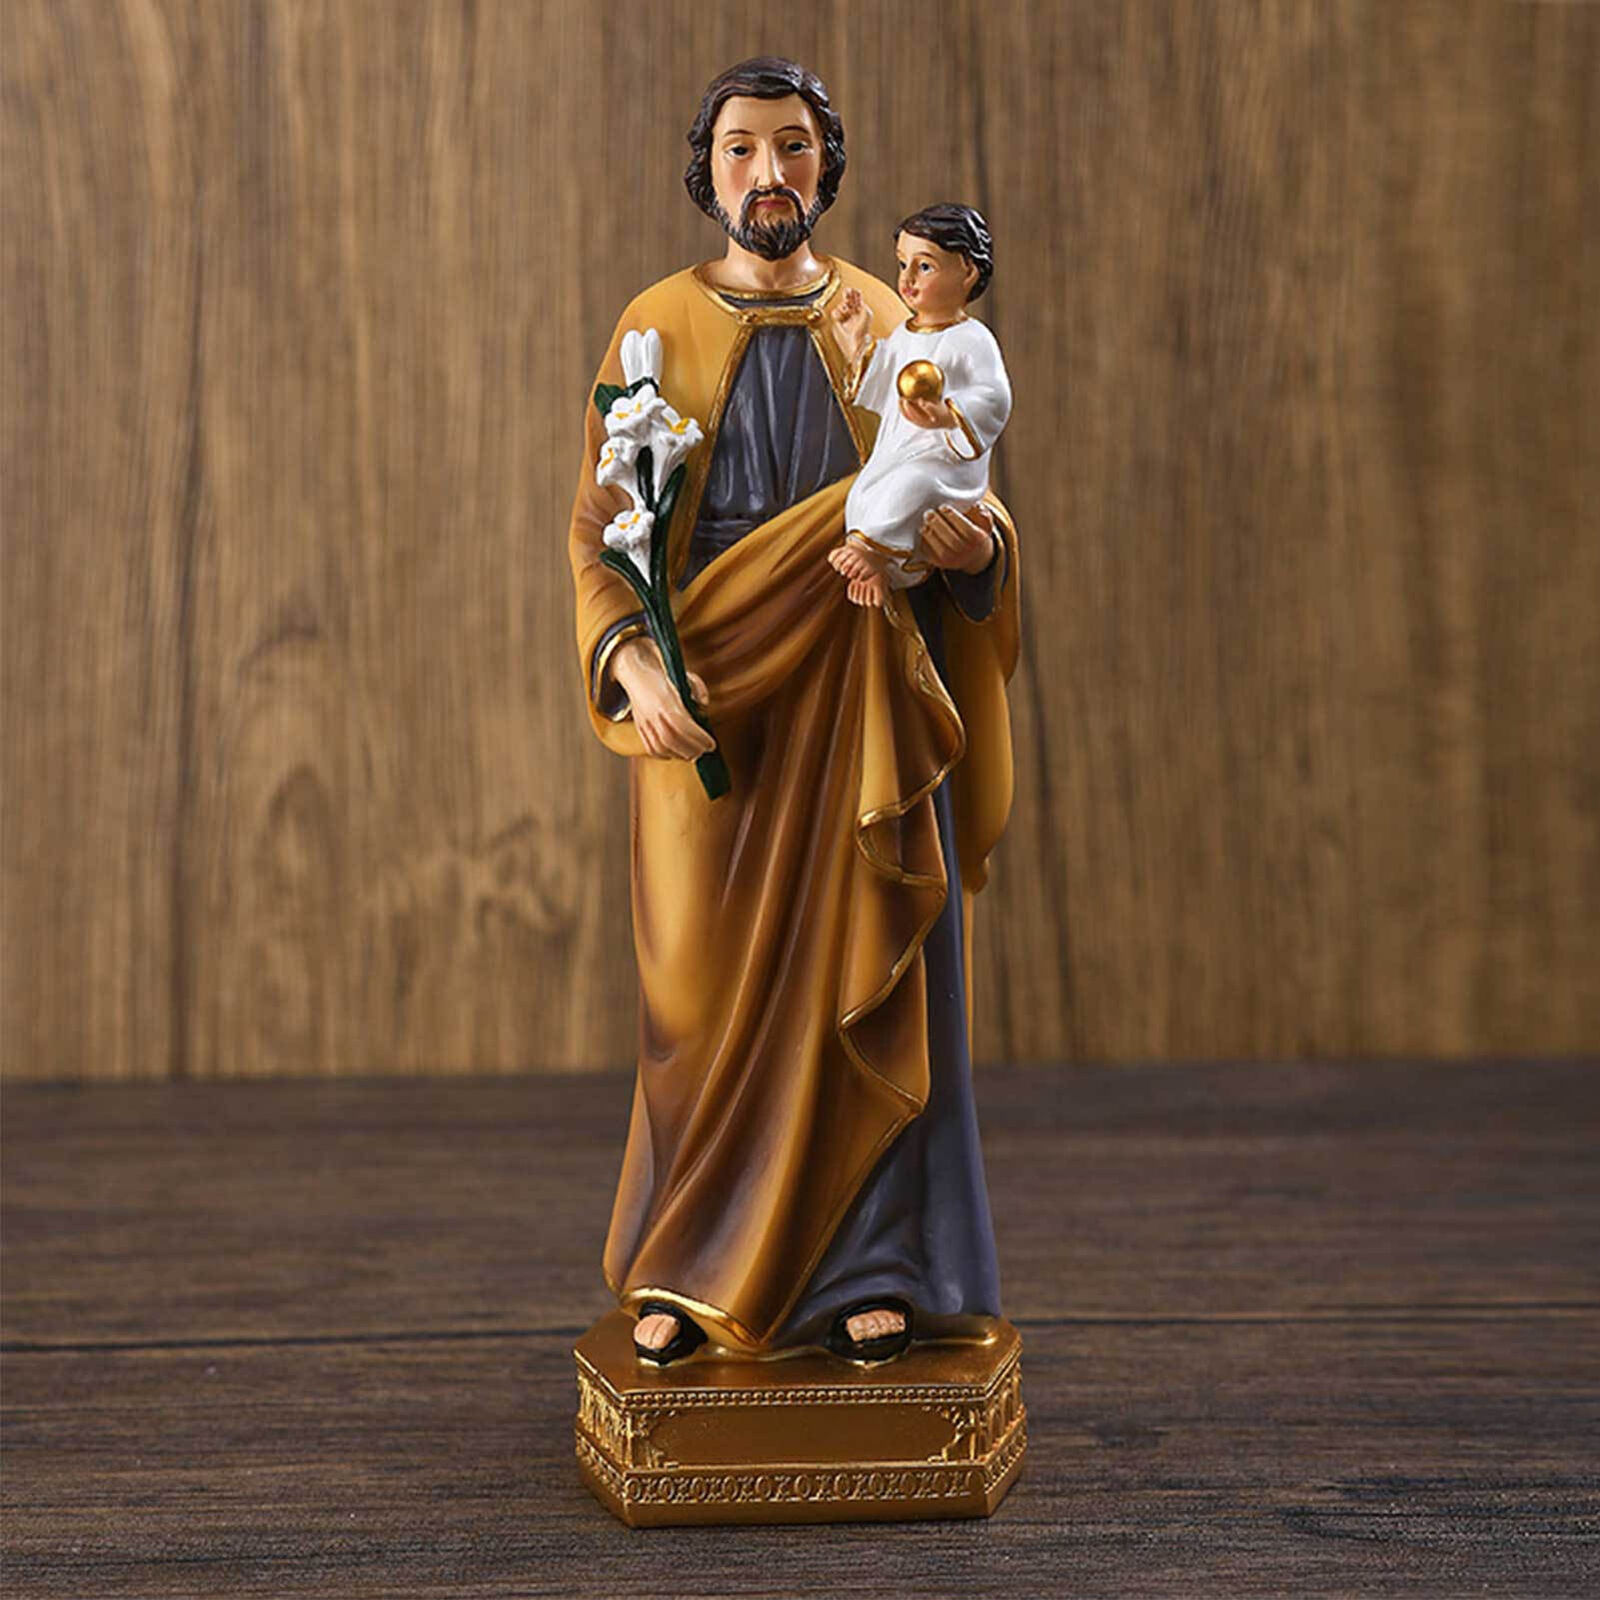 8 Inch St. Joseph Holding Child Jesus Statue Figurine Catholicism Ornament